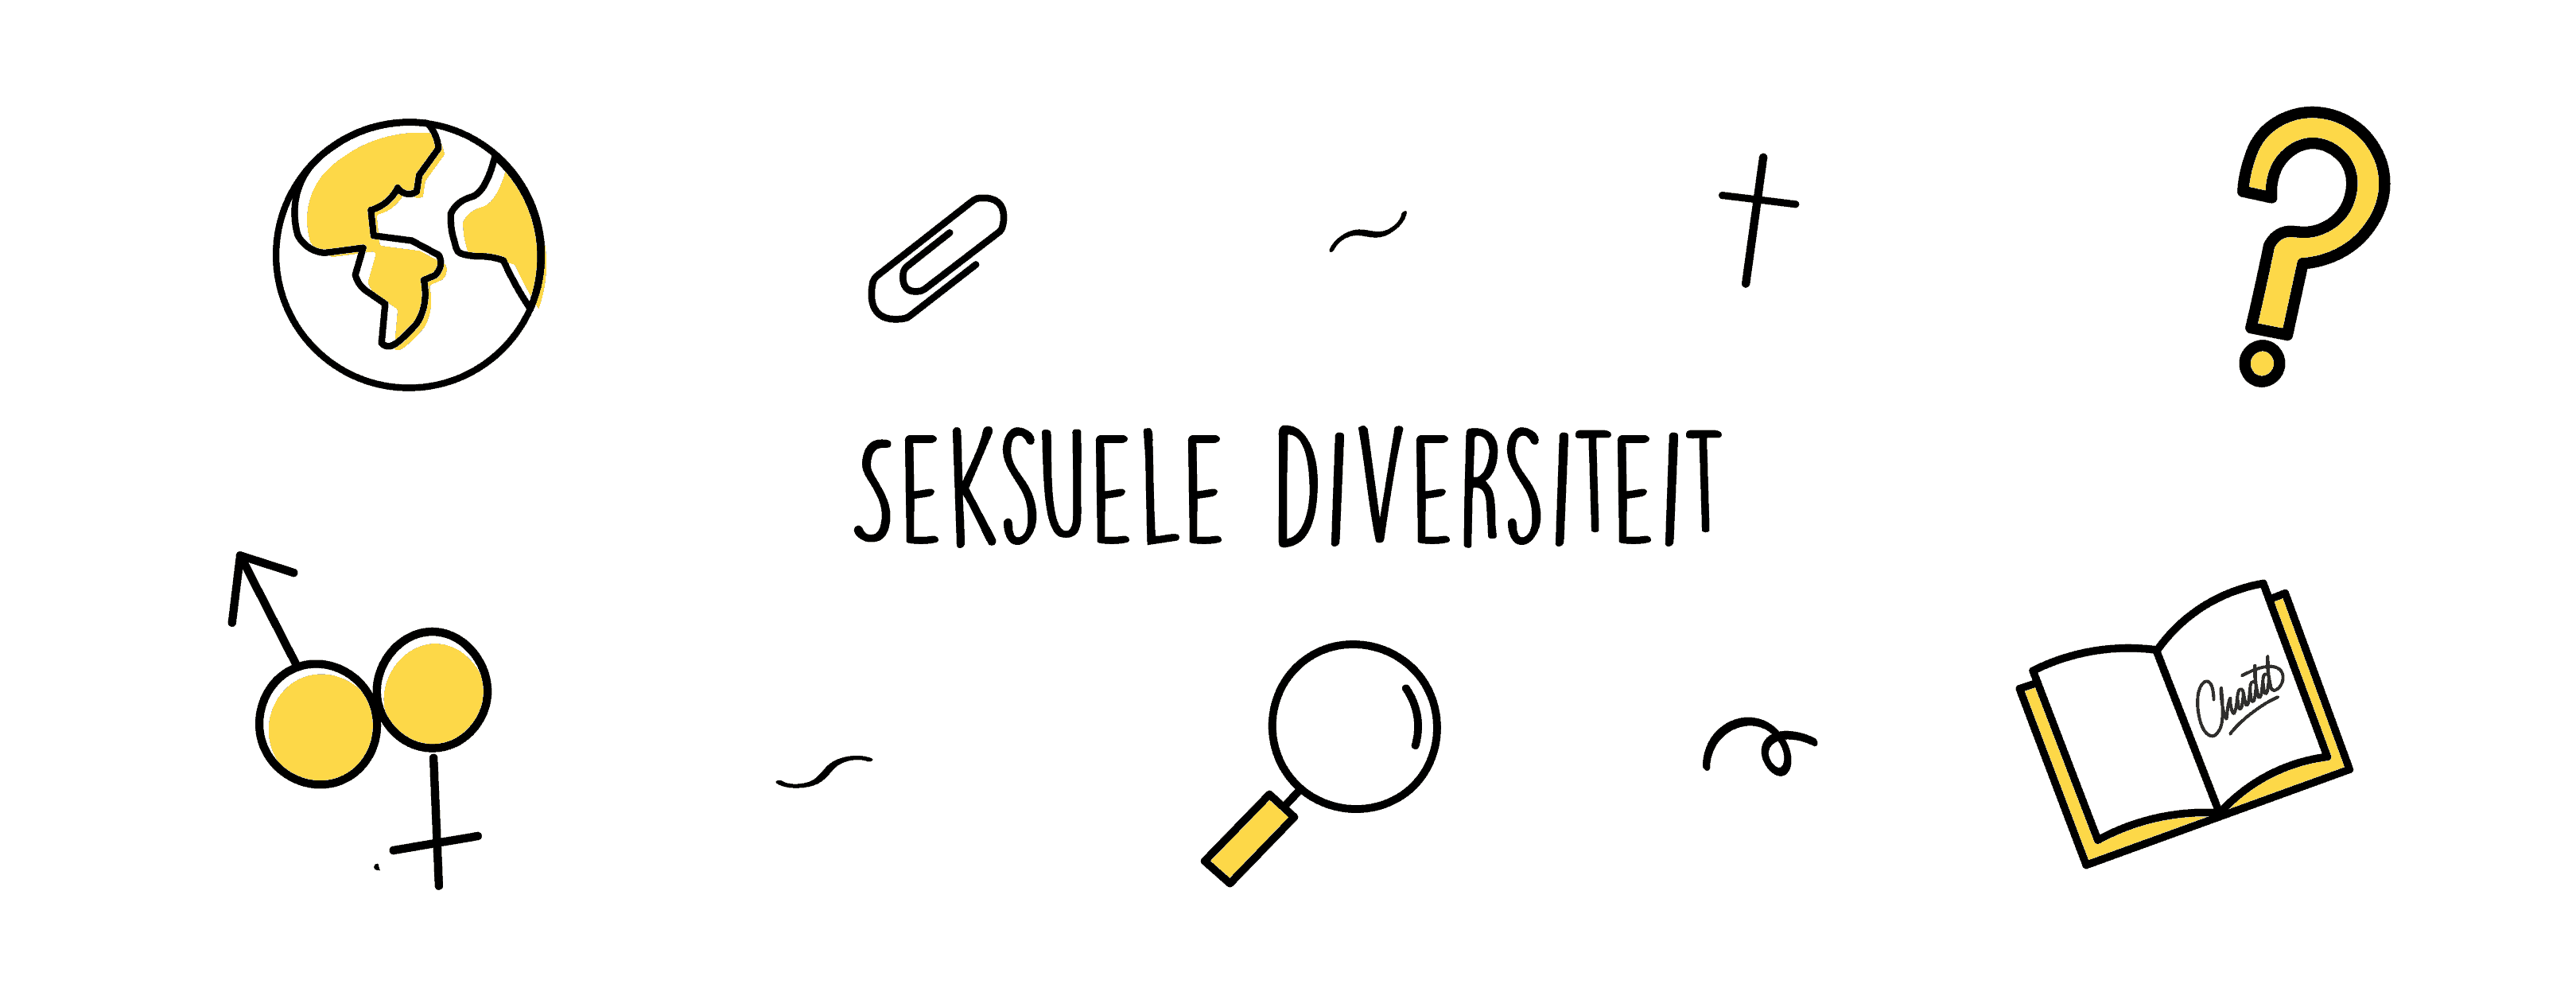 seksuele diversiteit